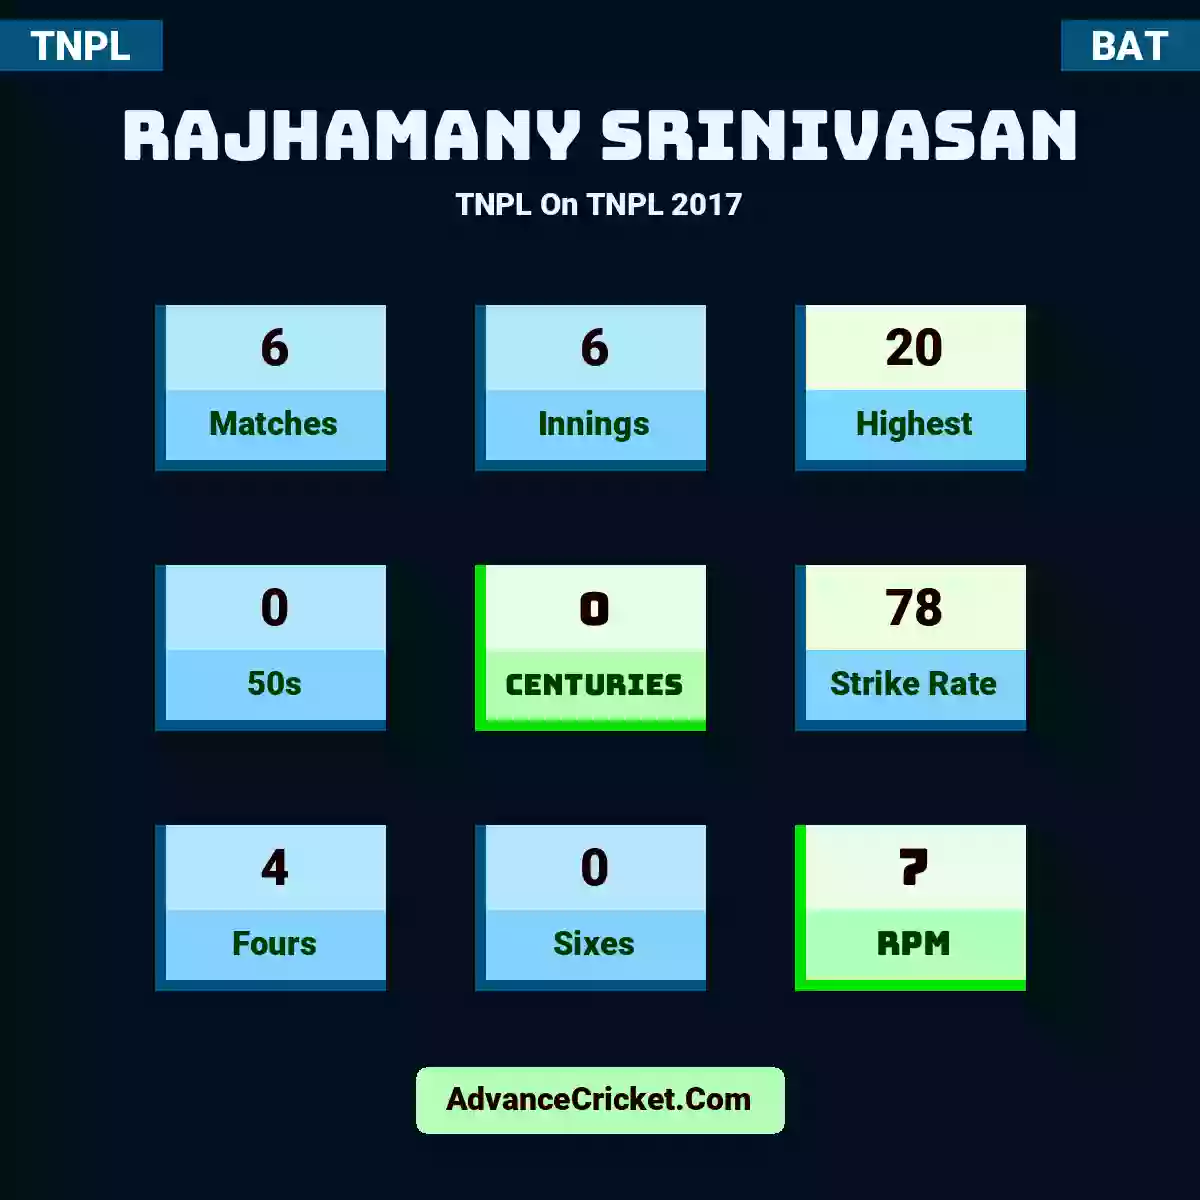 Rajhamany Srinivasan TNPL  On TNPL 2017, Rajhamany Srinivasan played 6 matches, scored 20 runs as highest, 0 half-centuries, and 0 centuries, with a strike rate of 78. R.Srinivasan hit 4 fours and 0 sixes, with an RPM of 7.